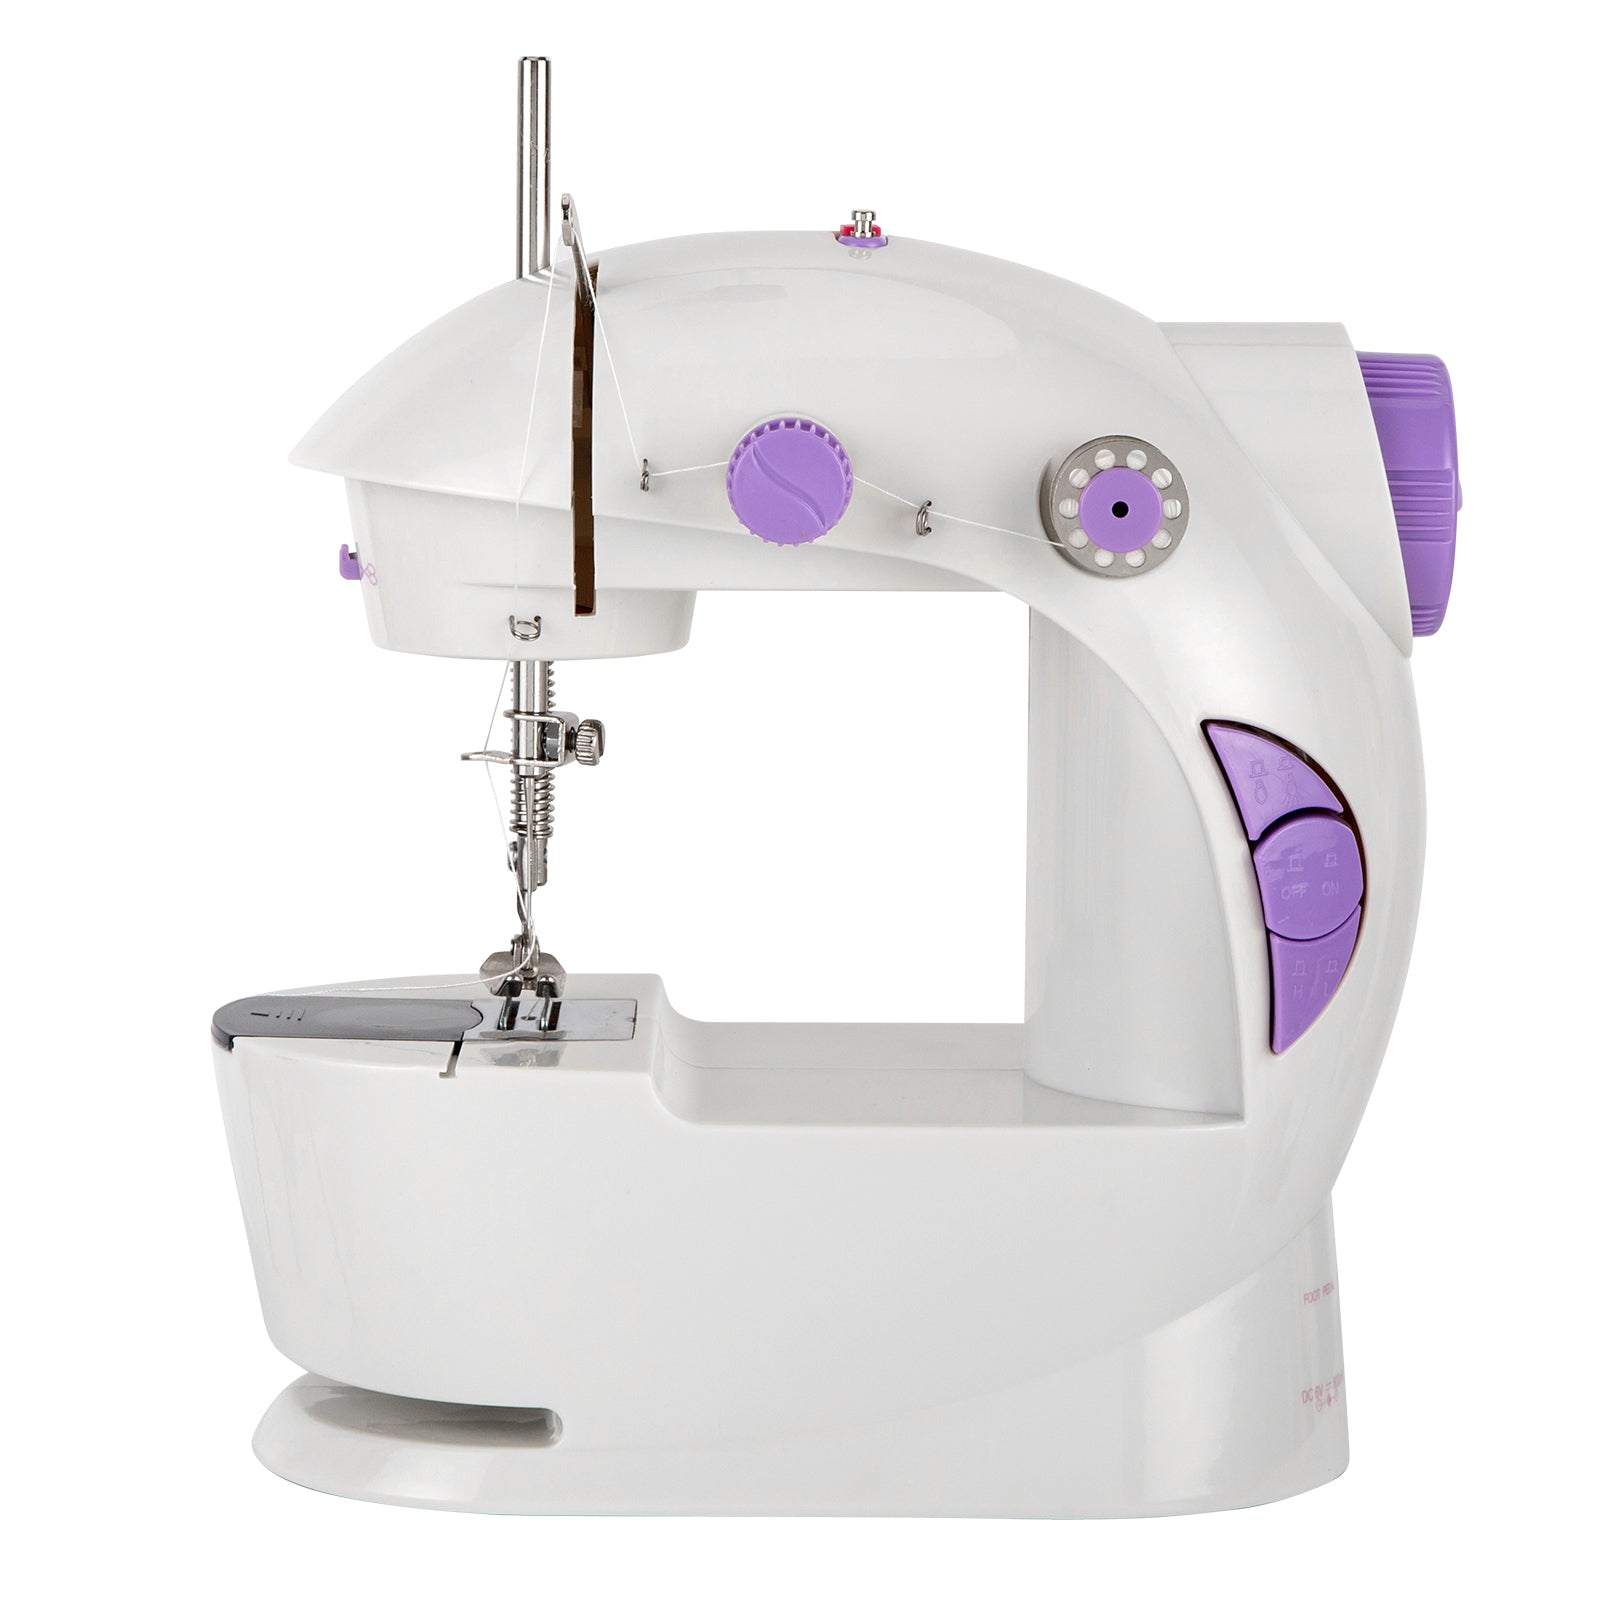 SUGIFT Mini Sewing Machine Home Electric Portable Sewing Machine White and Purple